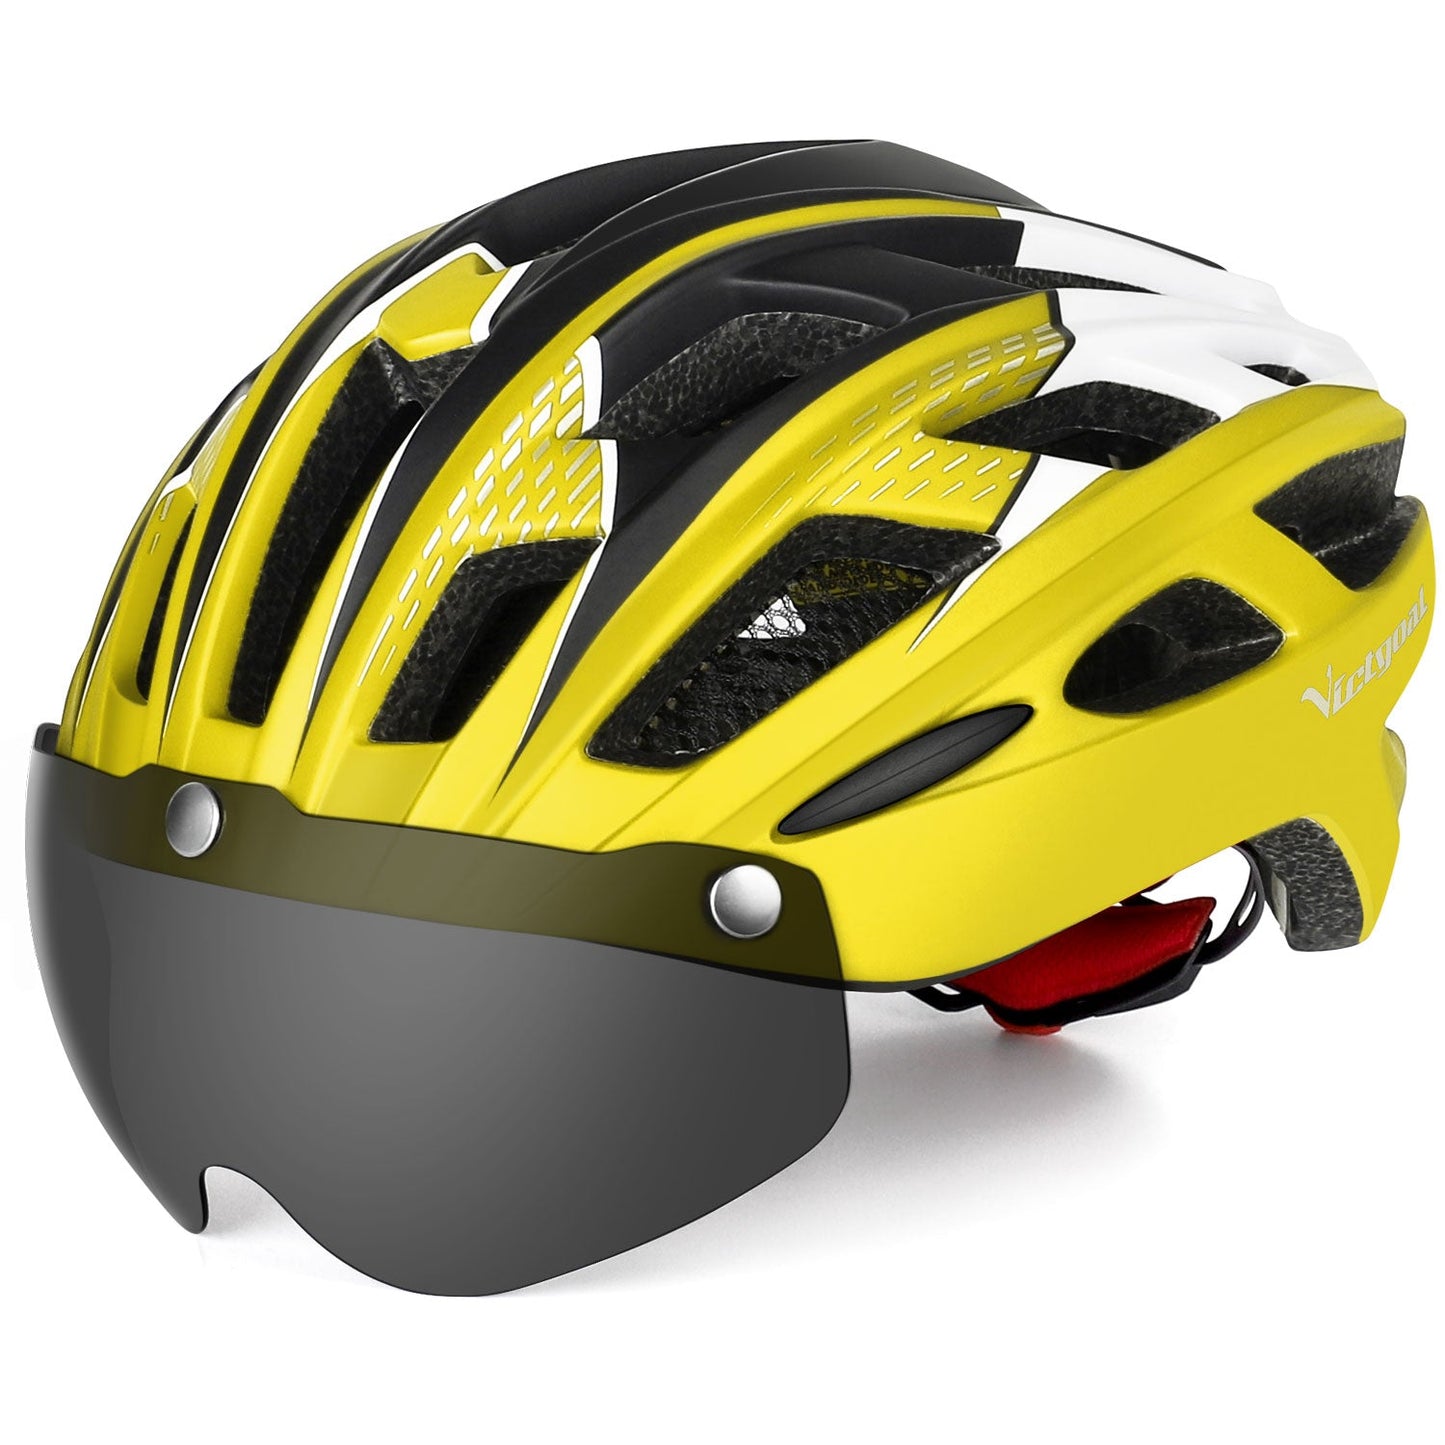 Goggles Bike Helmet LED Red Rear Light Urban E-Biking Adults Helmets VICTGOAL adultshelmets helmets